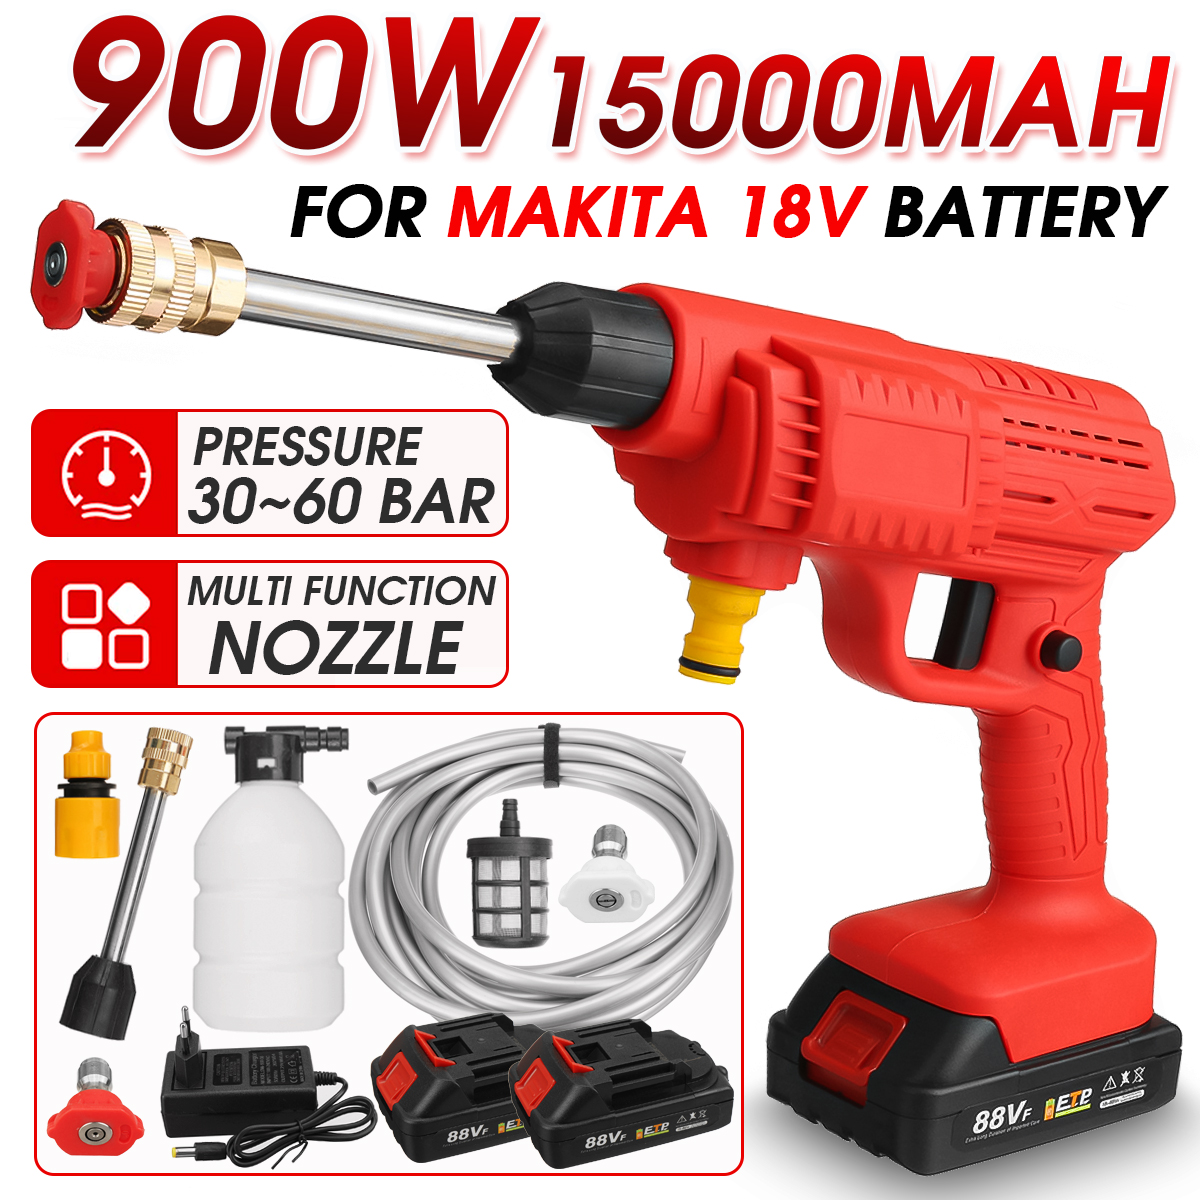 Cordless-High-Pressure-Washer-Car-Washing-Machine-Spray-Guns-Water-Cleaner-W-None12-Battery-For-Maki-1881246-1